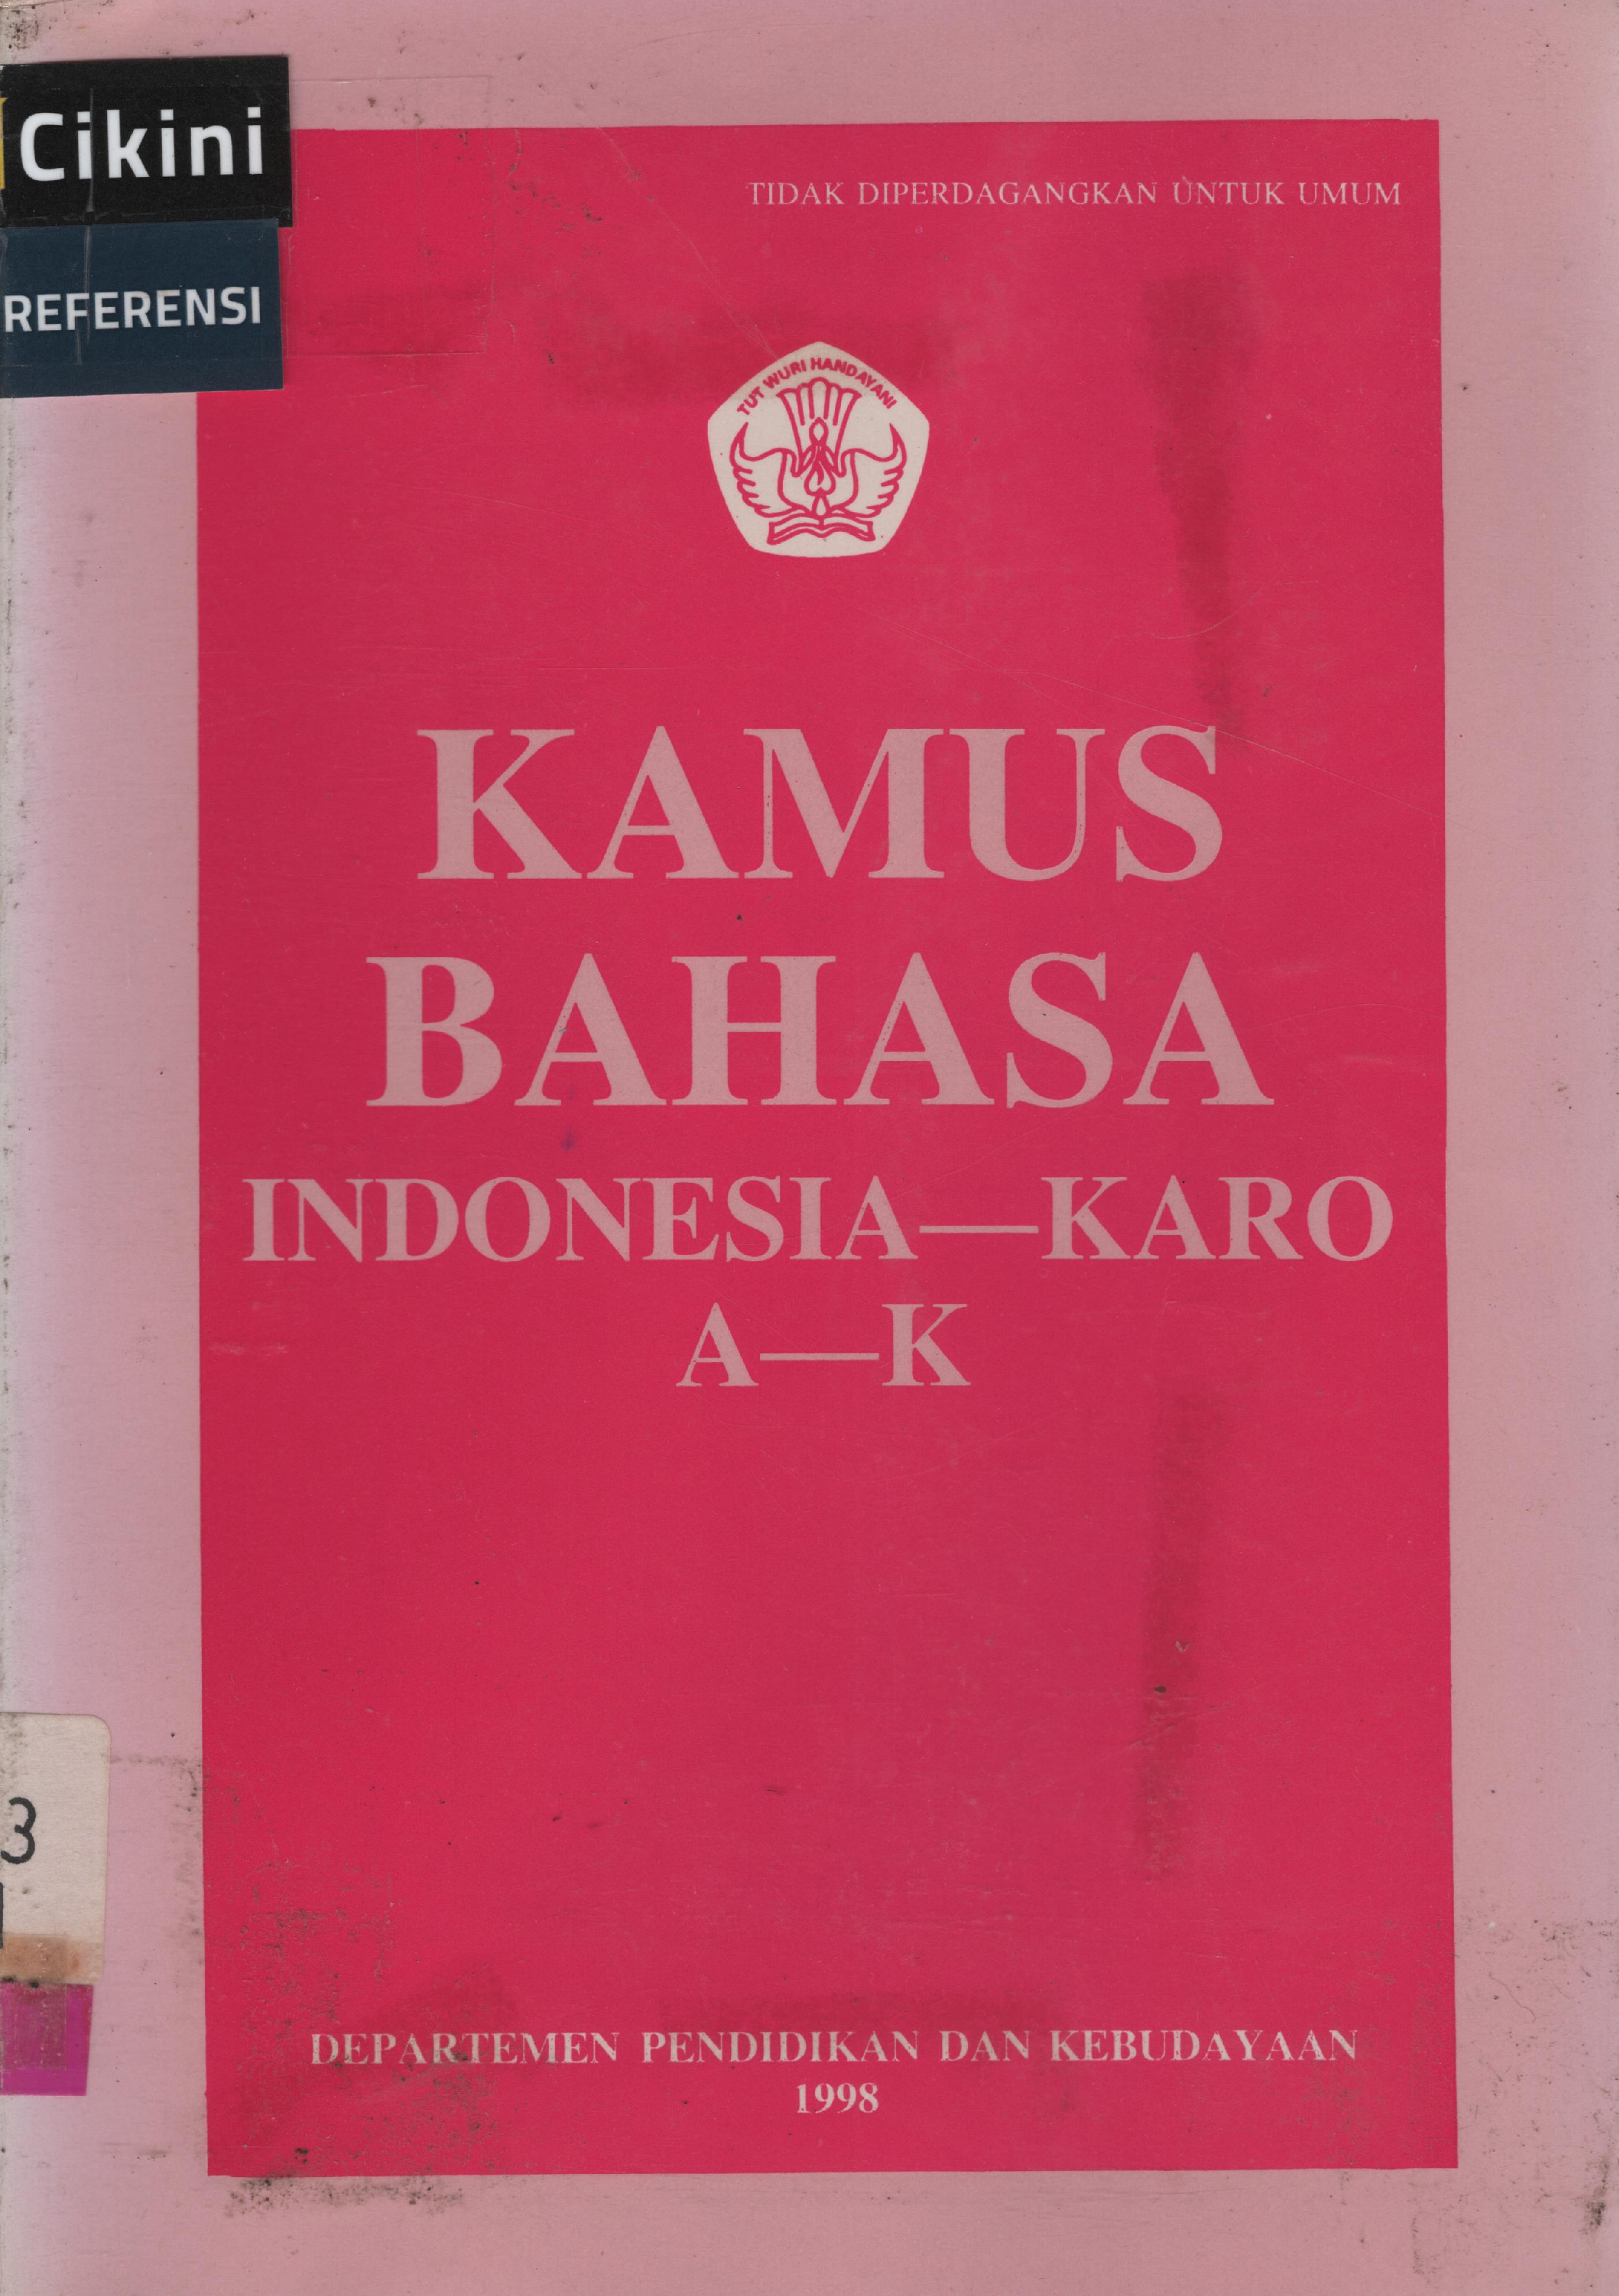 Kamus bahasa Indonesia - Karo A - K